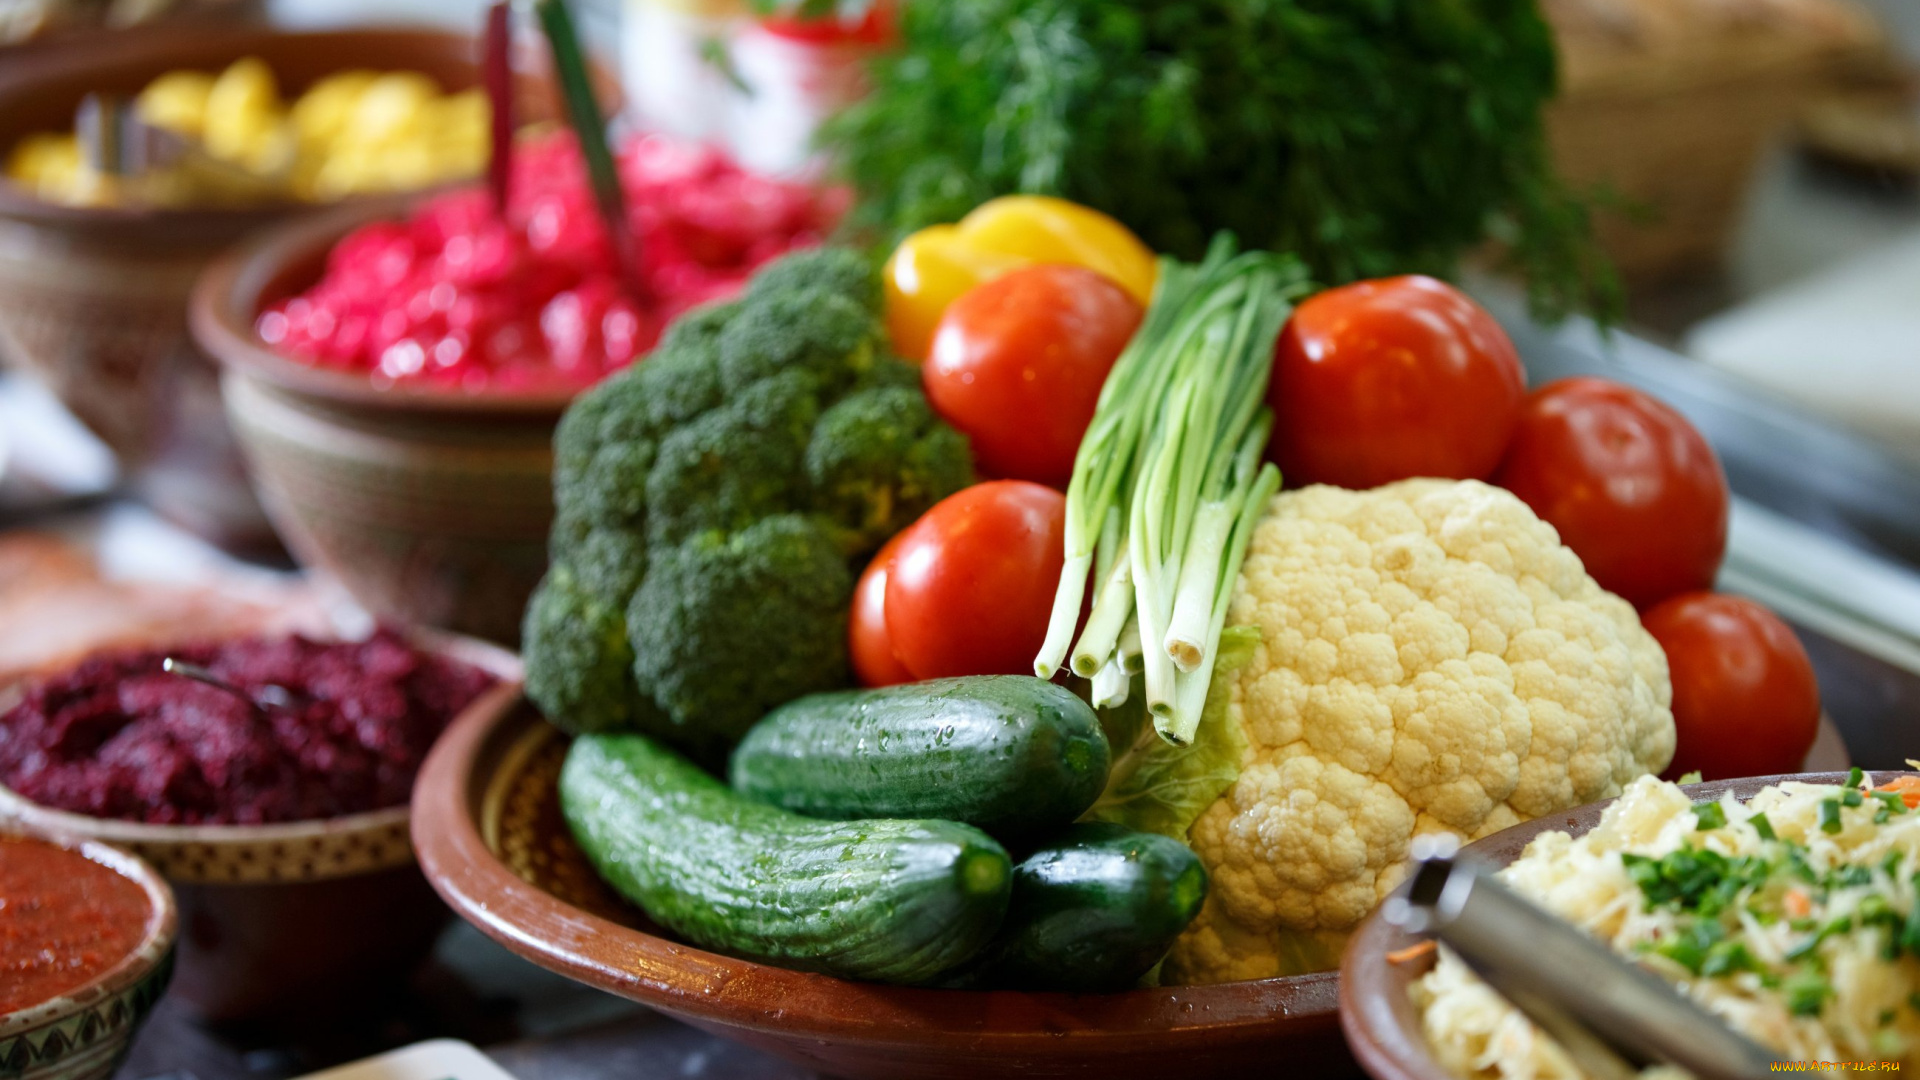 еда, овощи, лук, огурцы, помидоры, брокколи, капуста, томаты